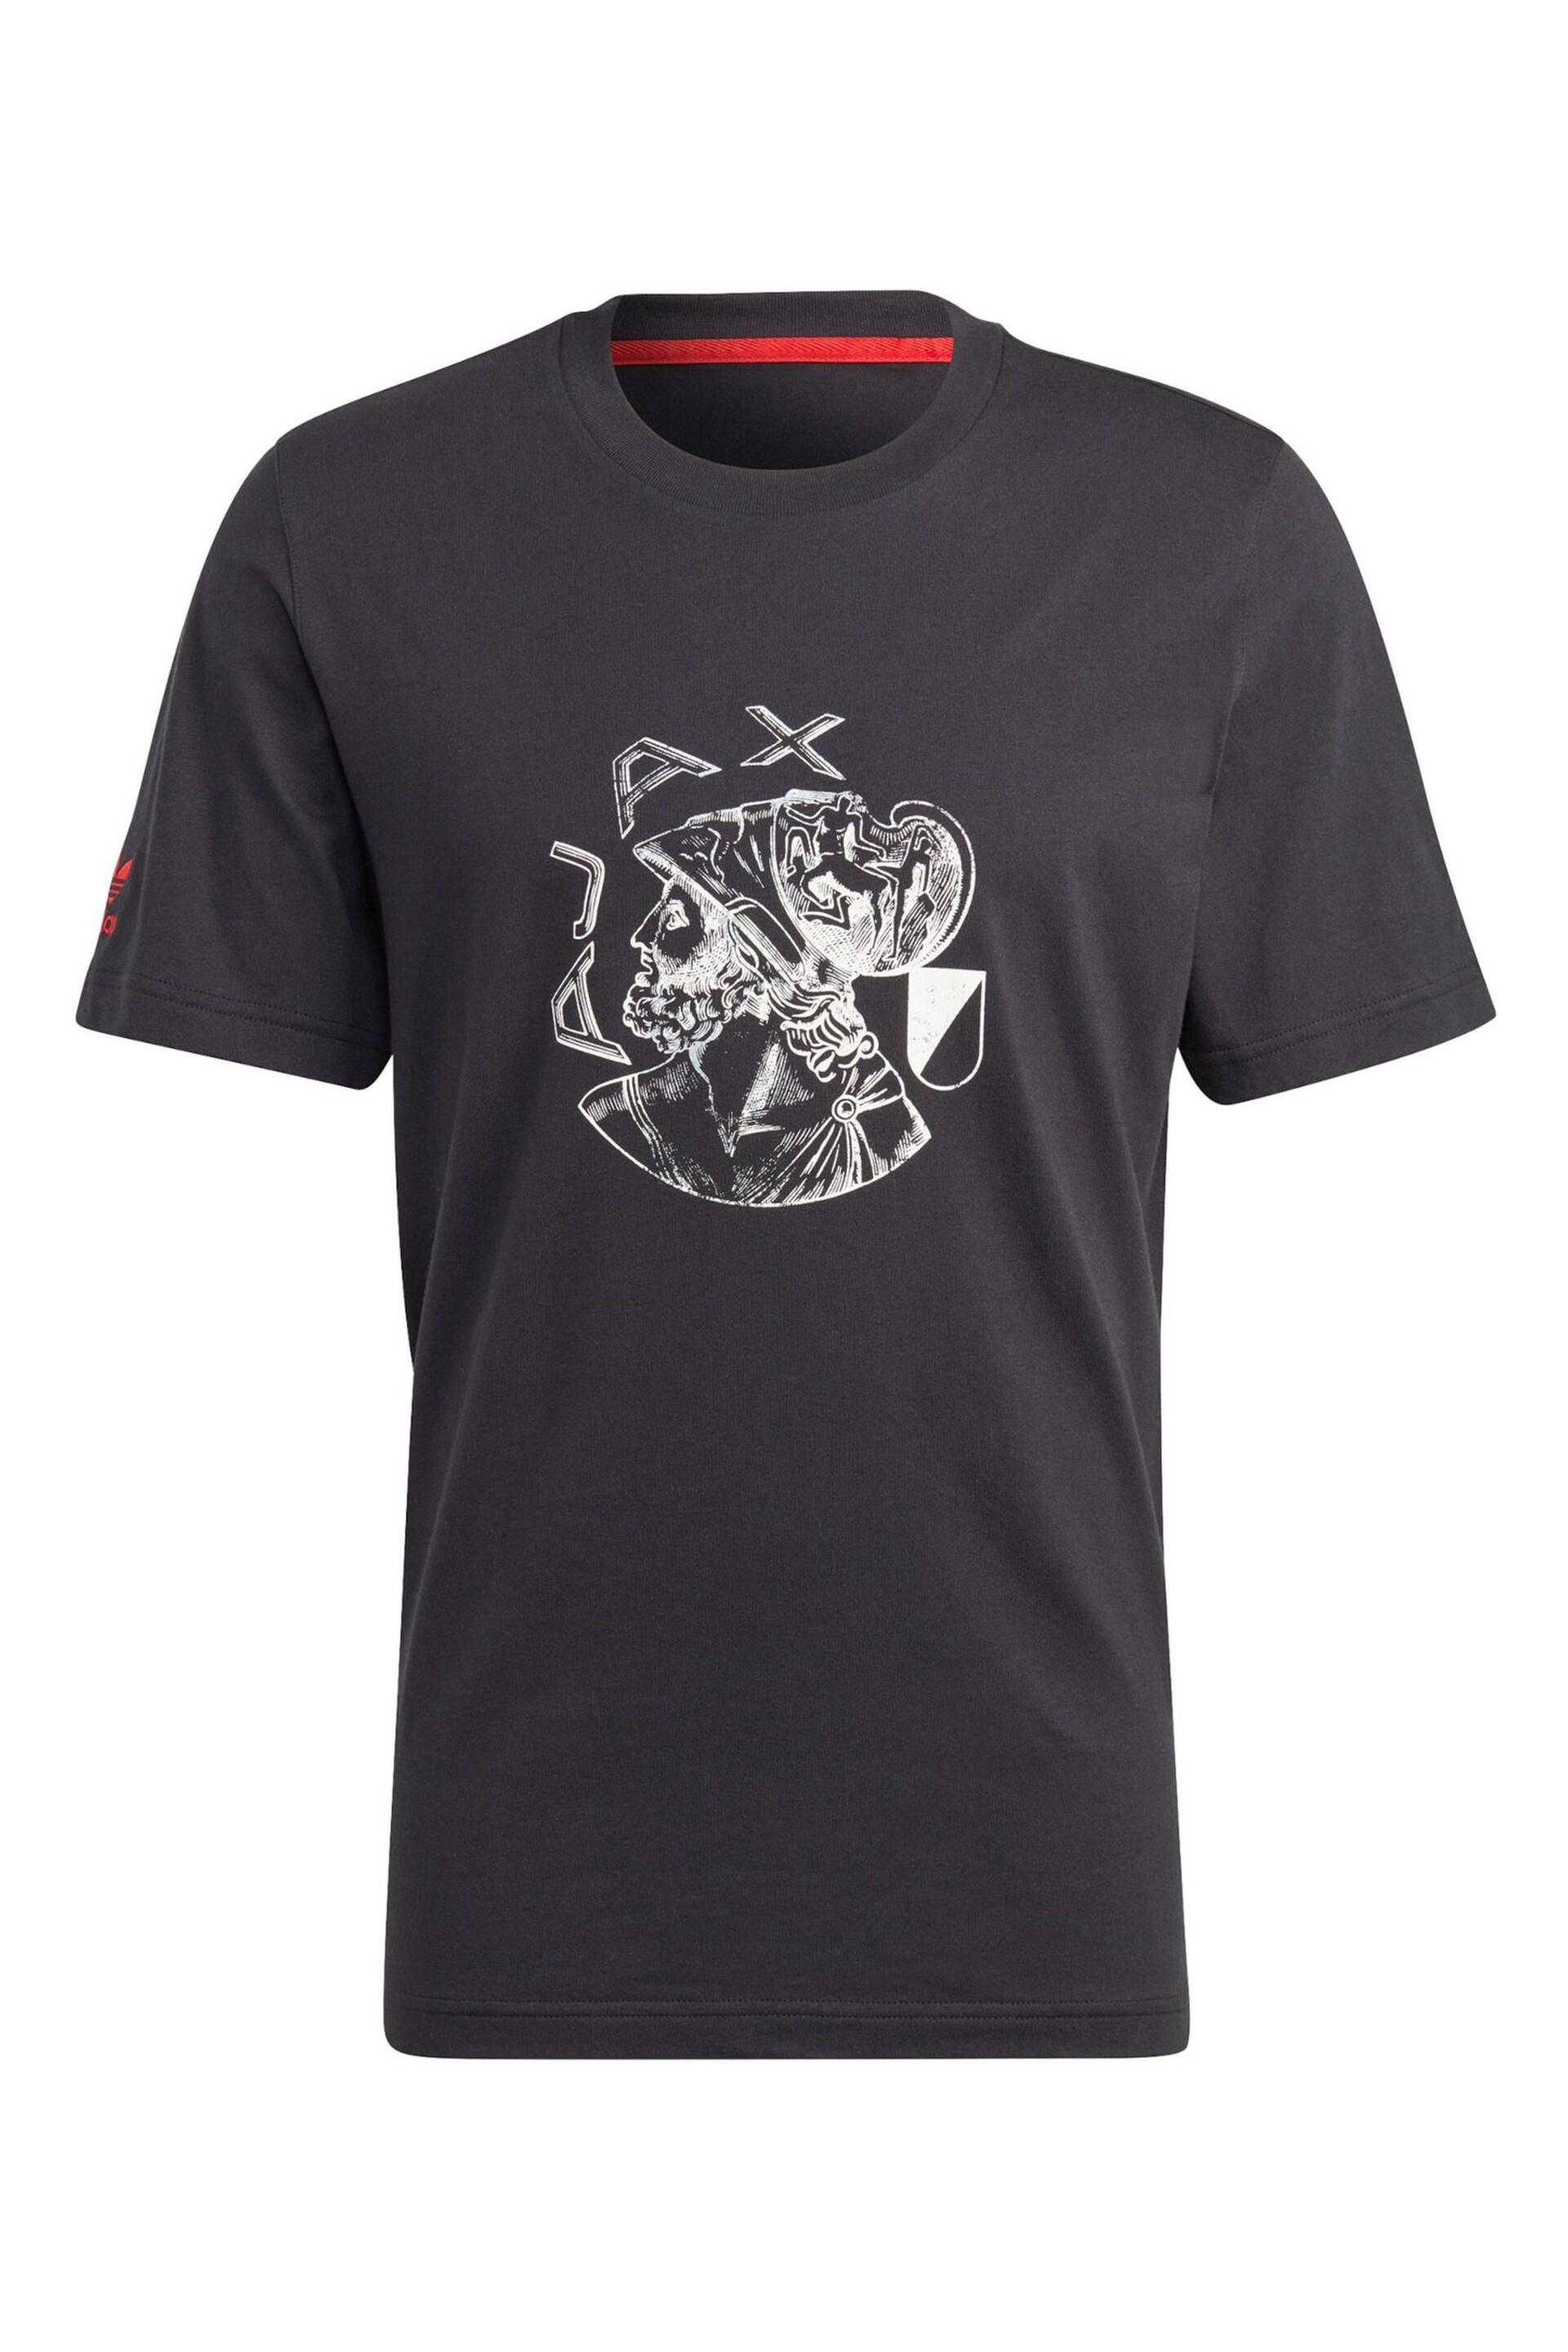 adidas Black Ajax x Originals Crest T-Shirt - Image 3 of 3